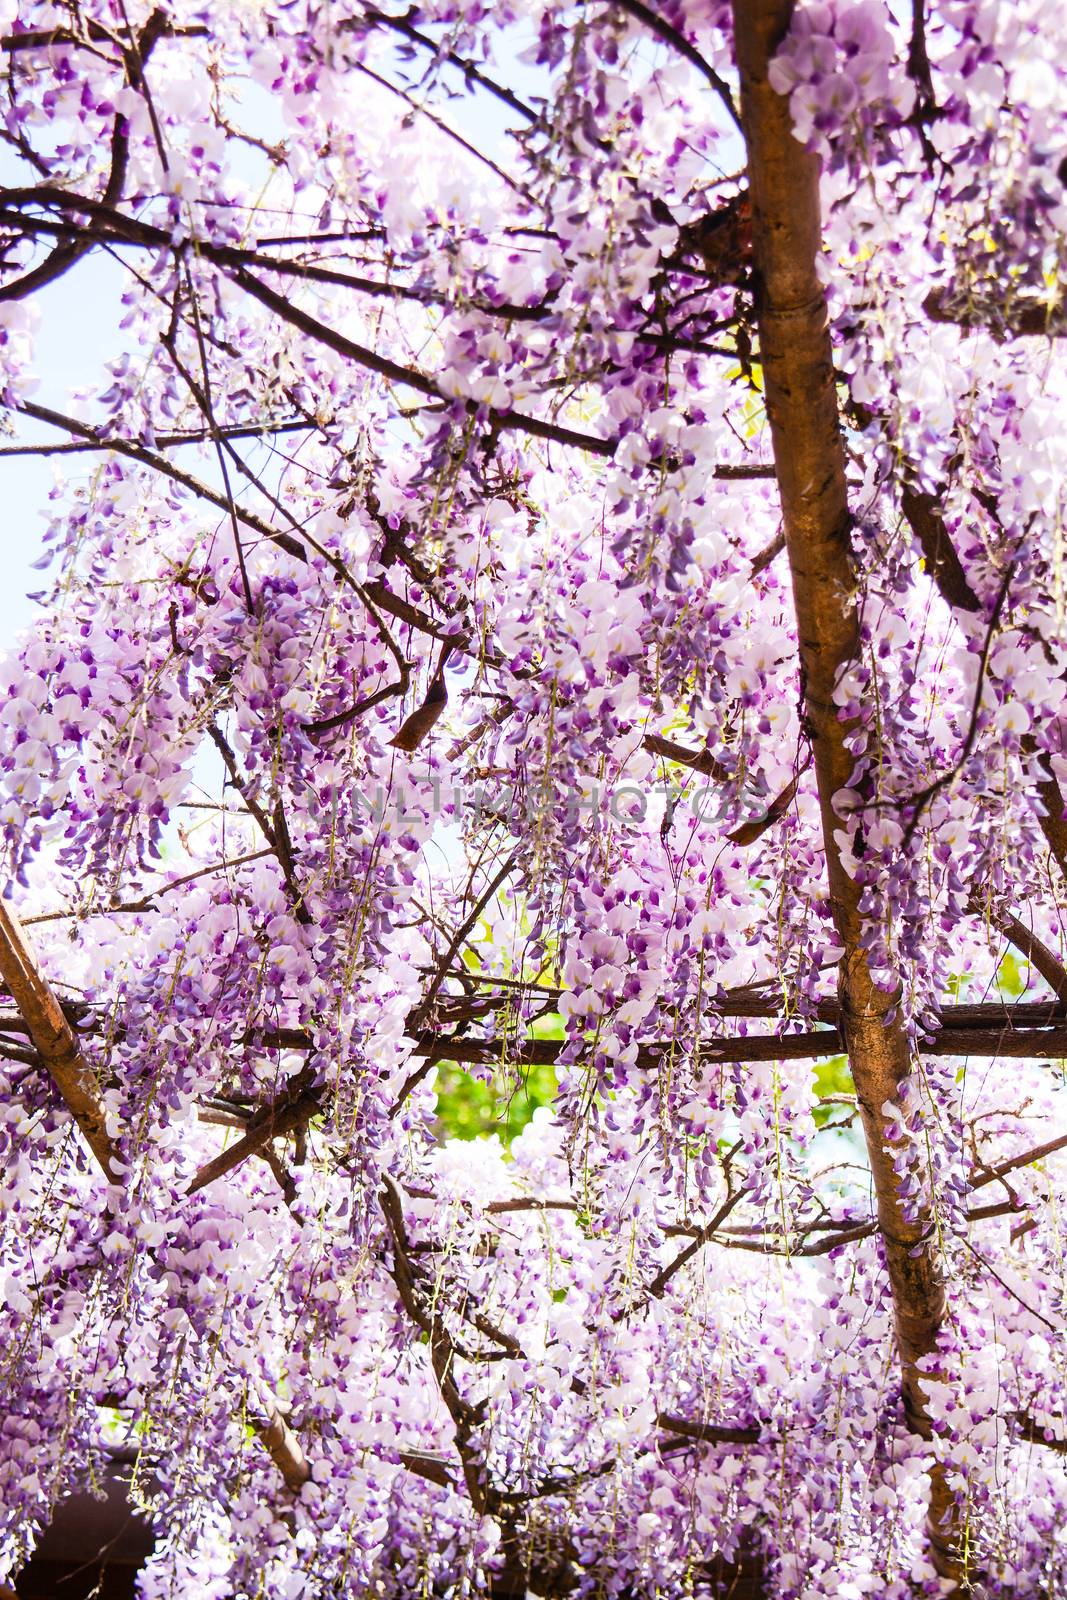 wisteria flowers as background by iacobino